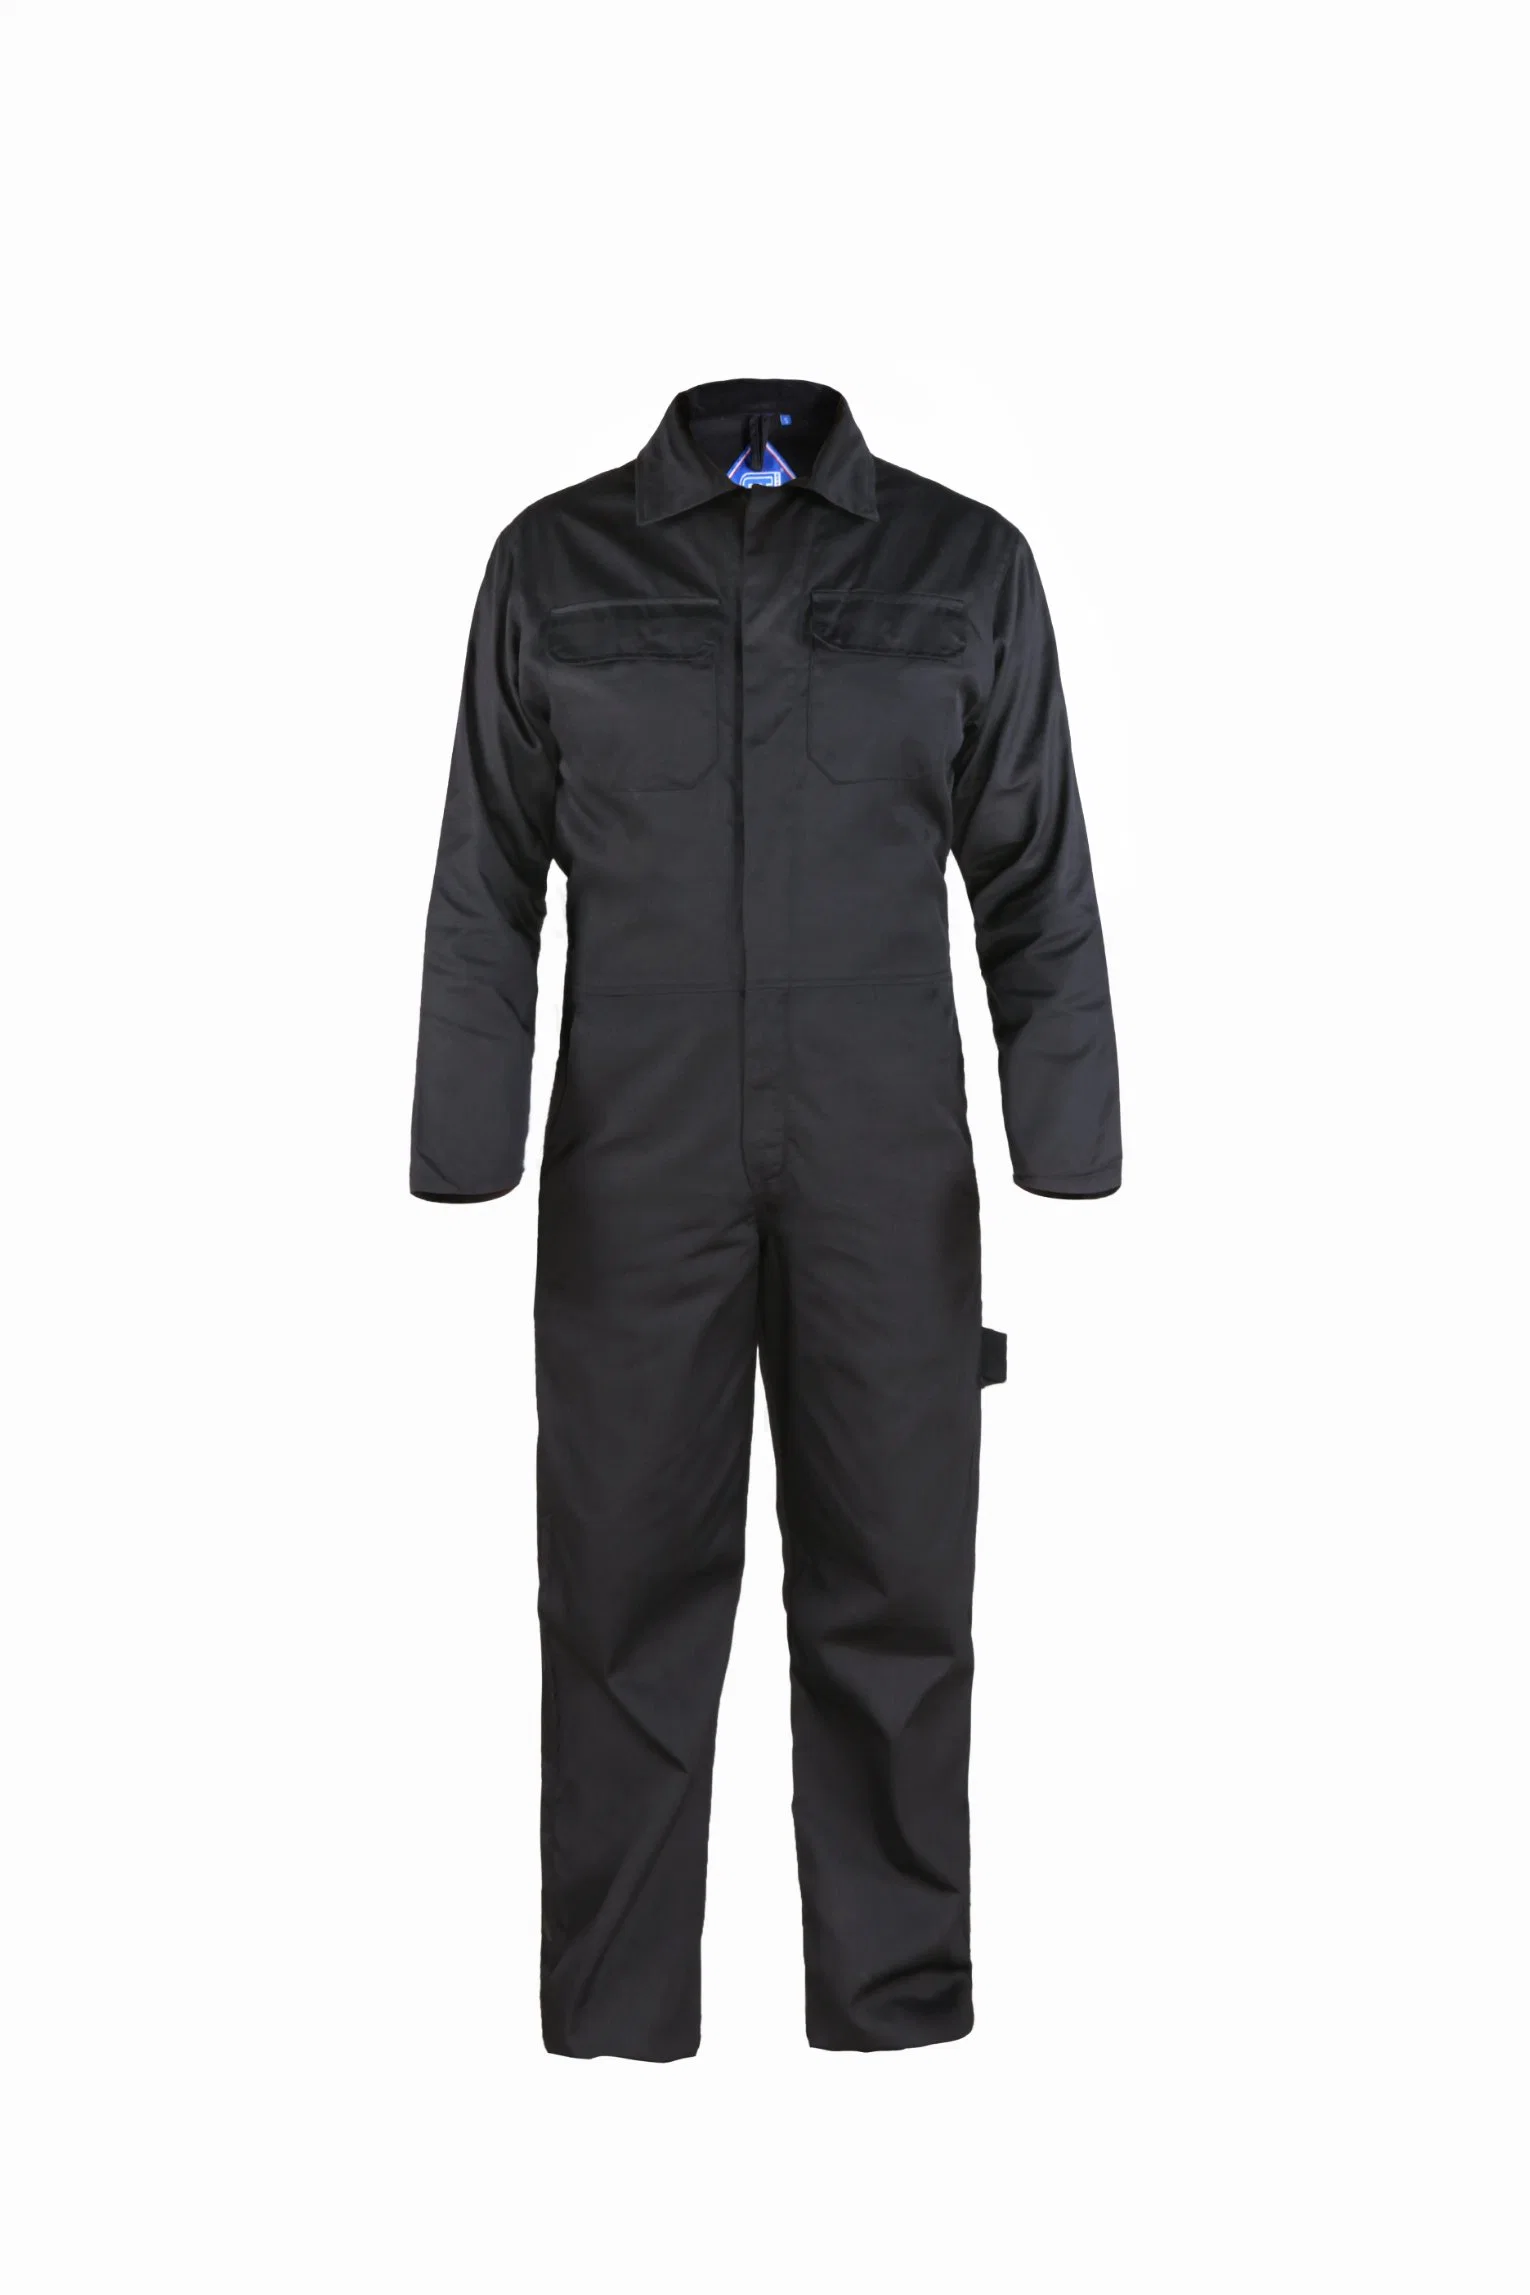 2019 Comfort Worker Uniform, Unisex Work Clothes